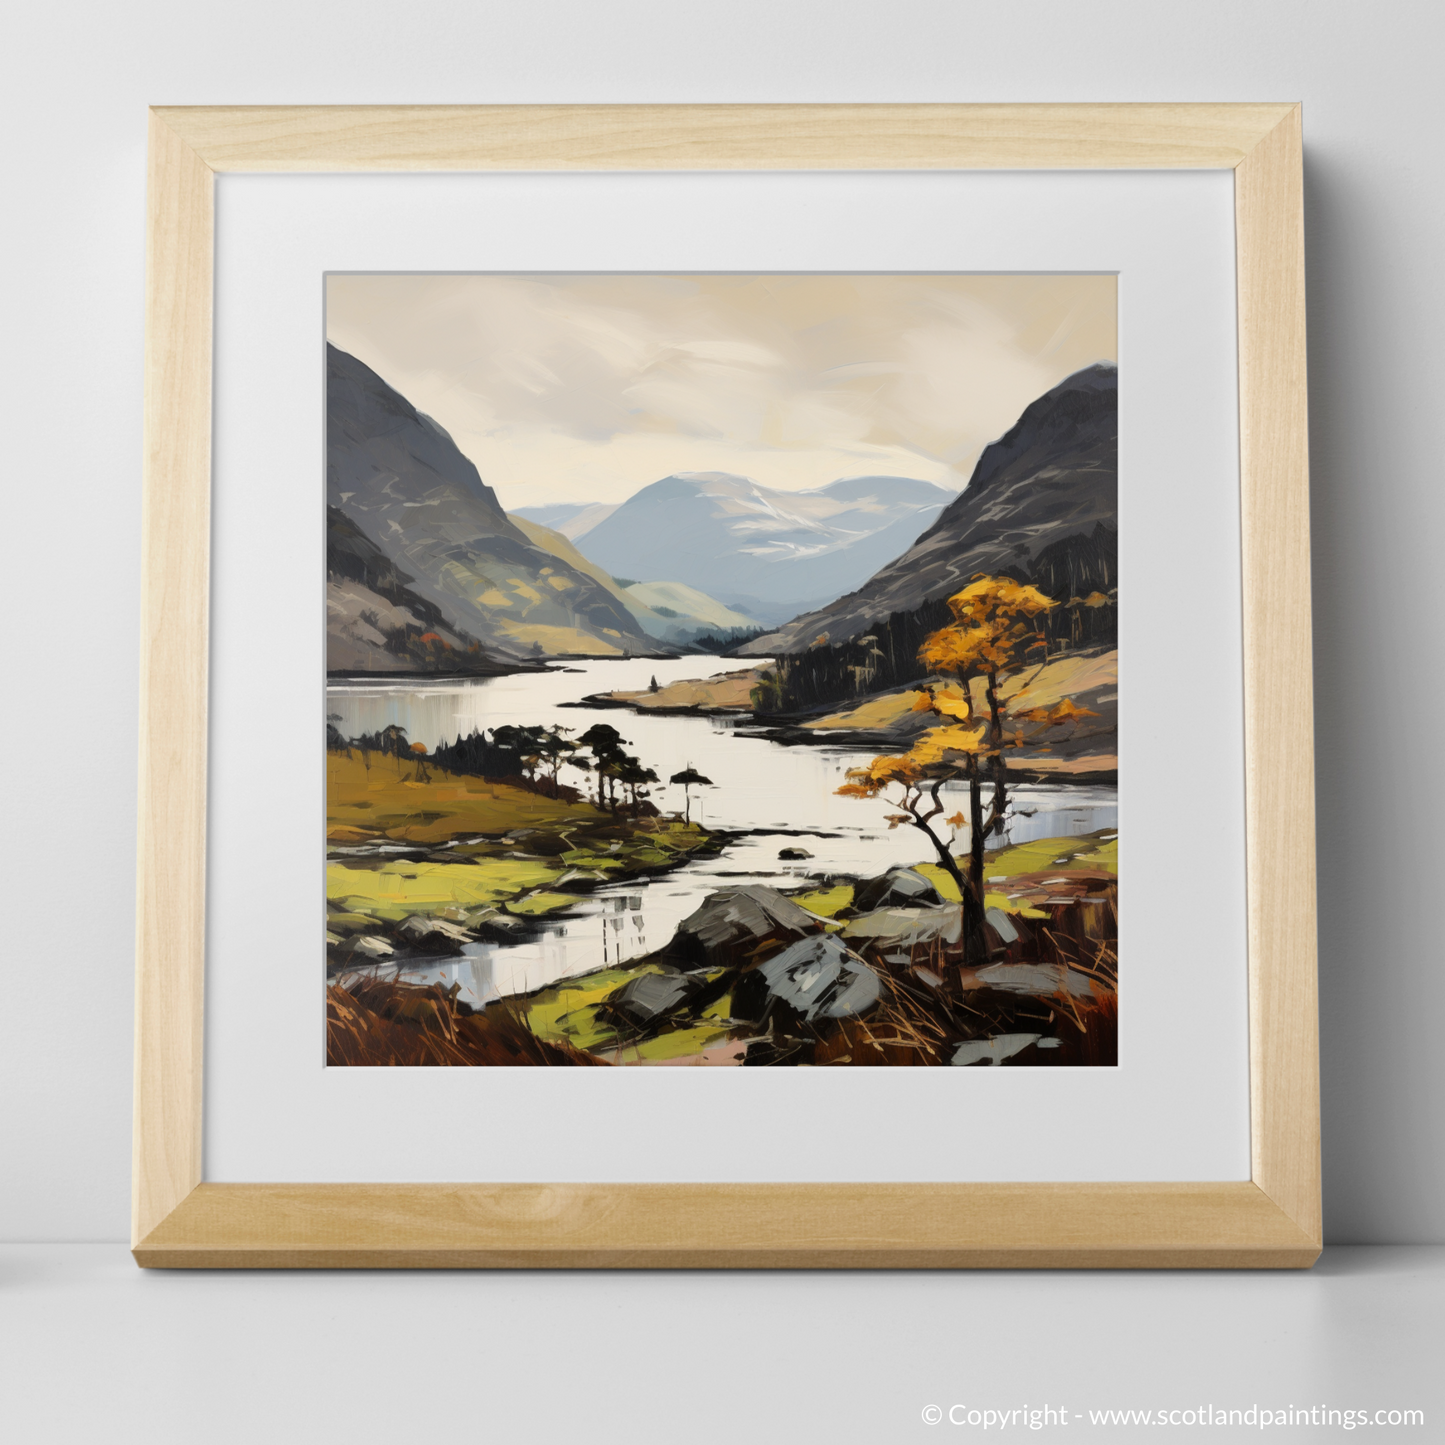 Art Print of Glenfinnan, Highlands with a natural frame